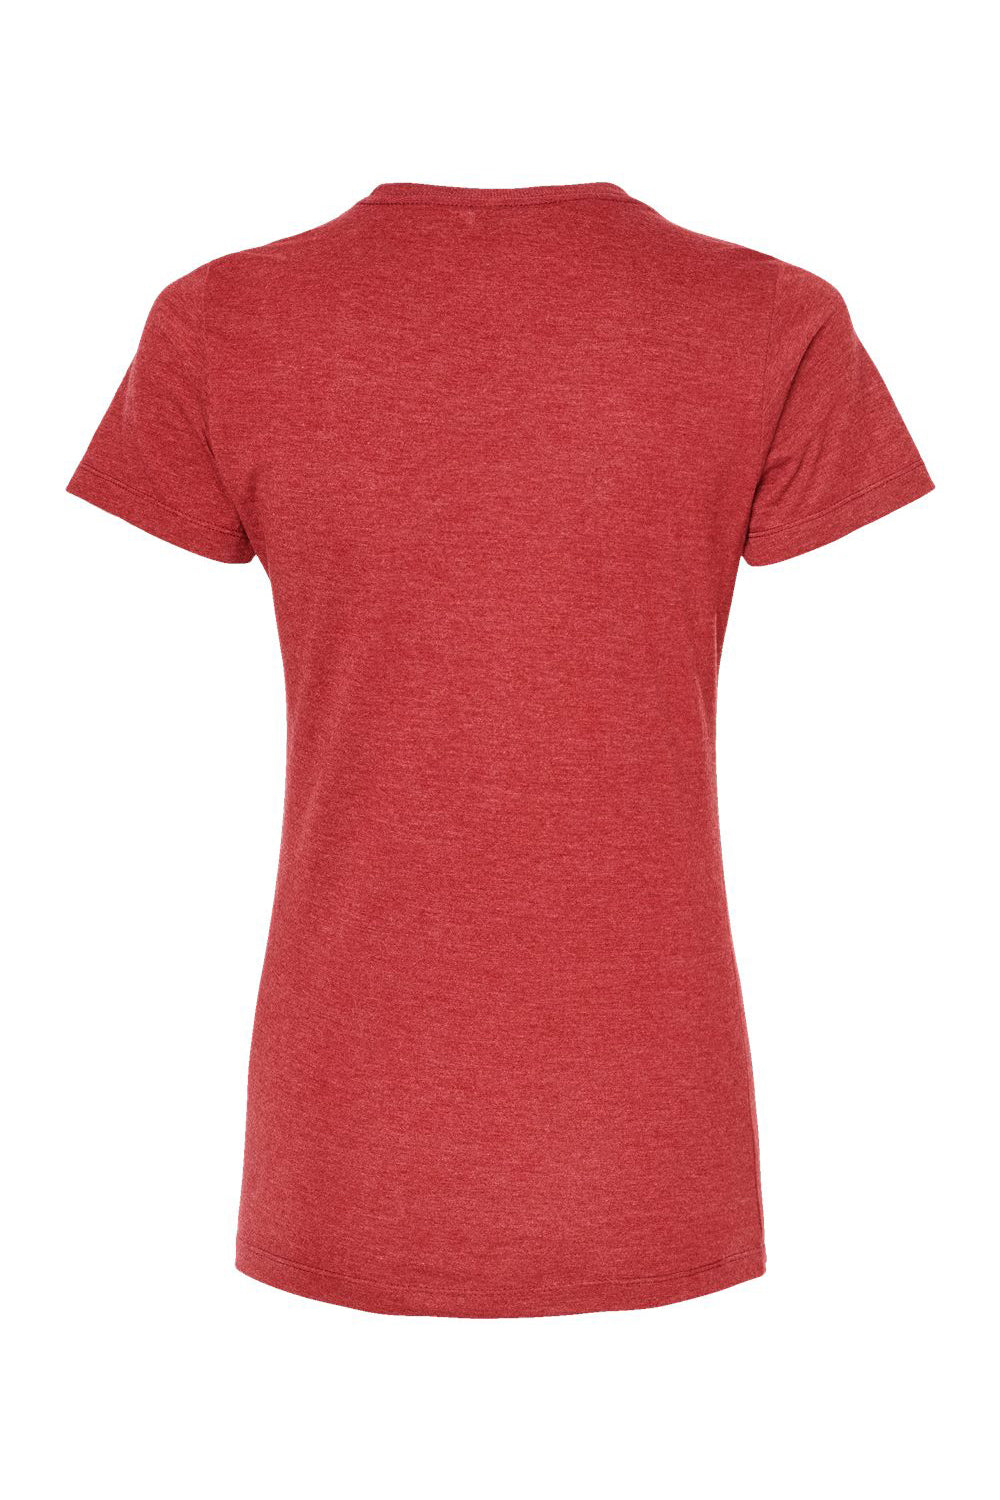 Tultex 542 Womens Premium Short Sleeve Crewneck T-Shirt Heather Red Flat Back